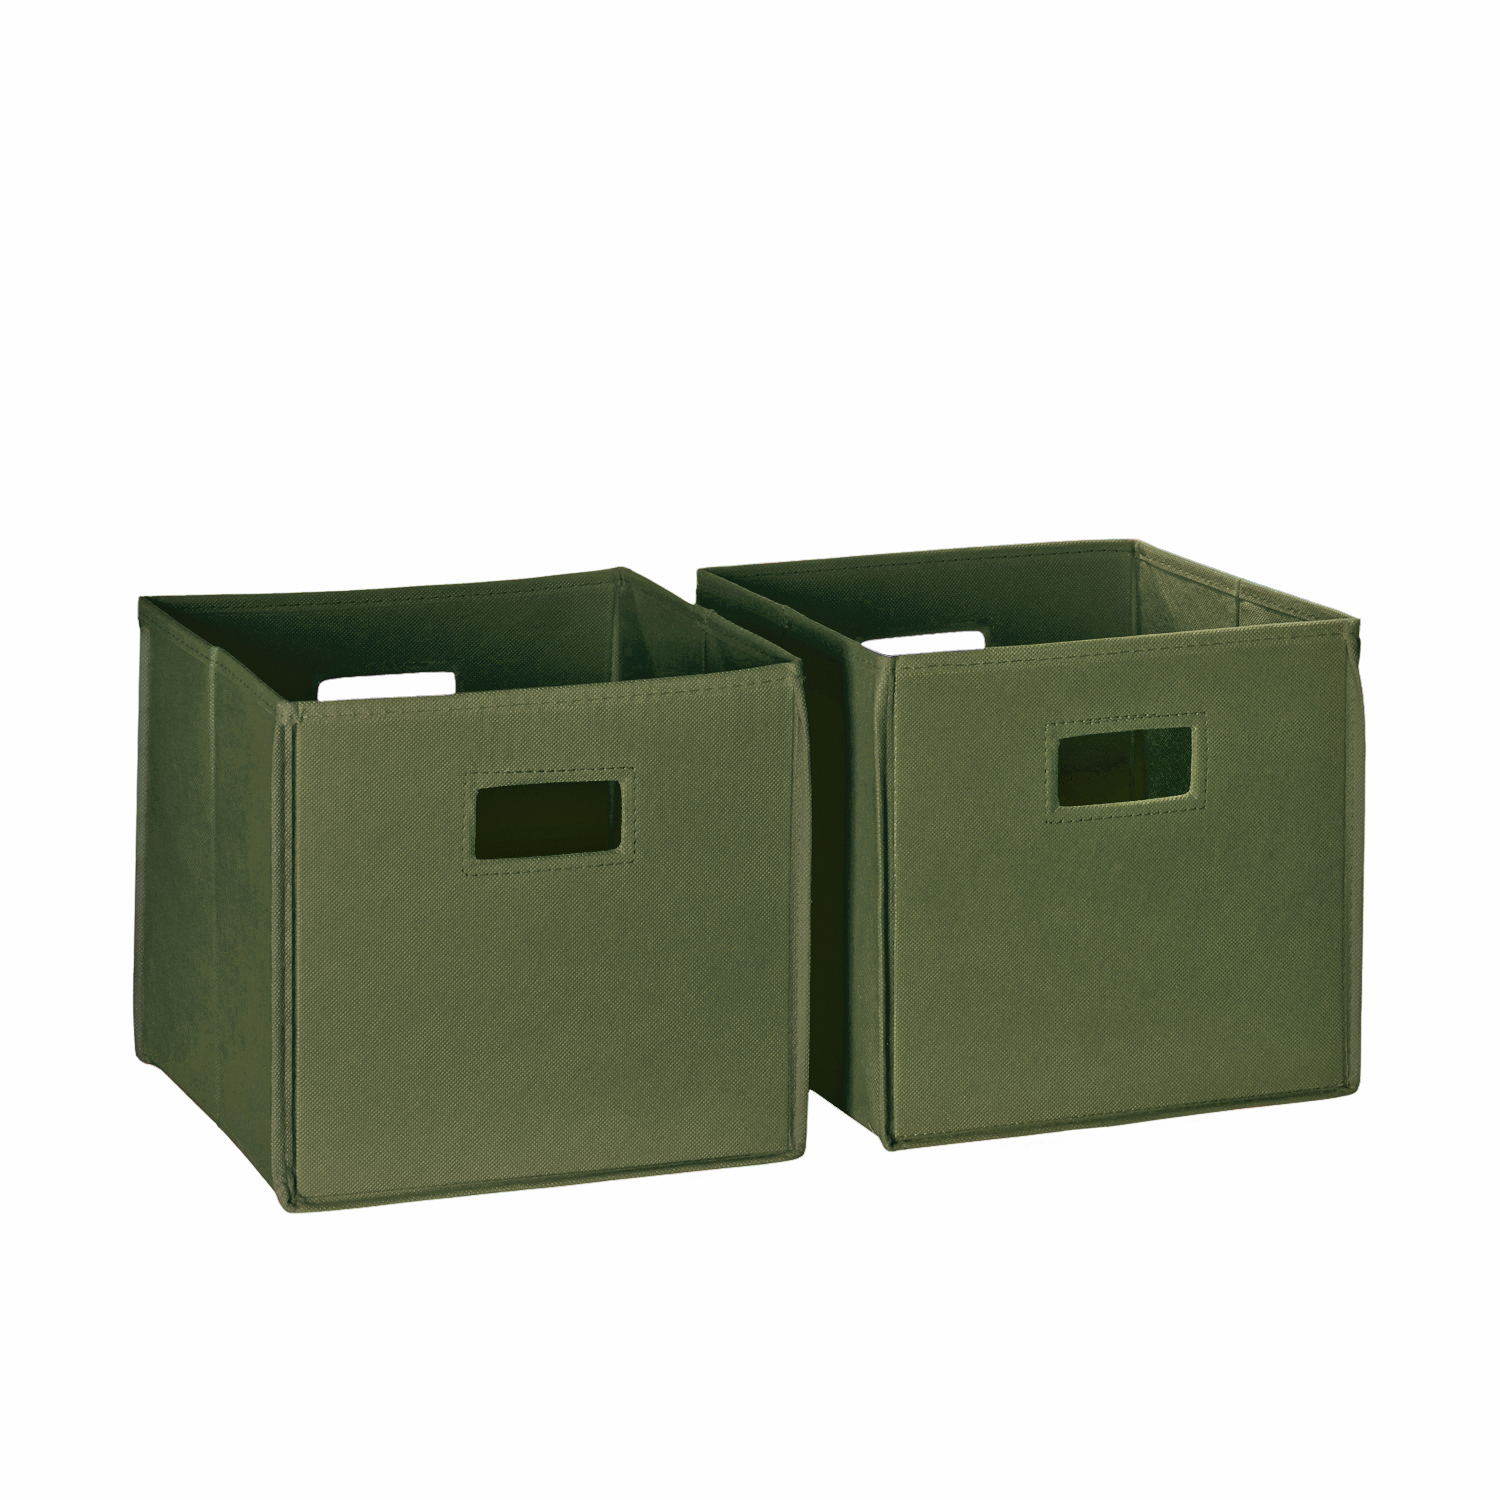 RiverRidge Home Folding Fabric Cube Storage Bin Set of 2 - Olive - image 1 of 8